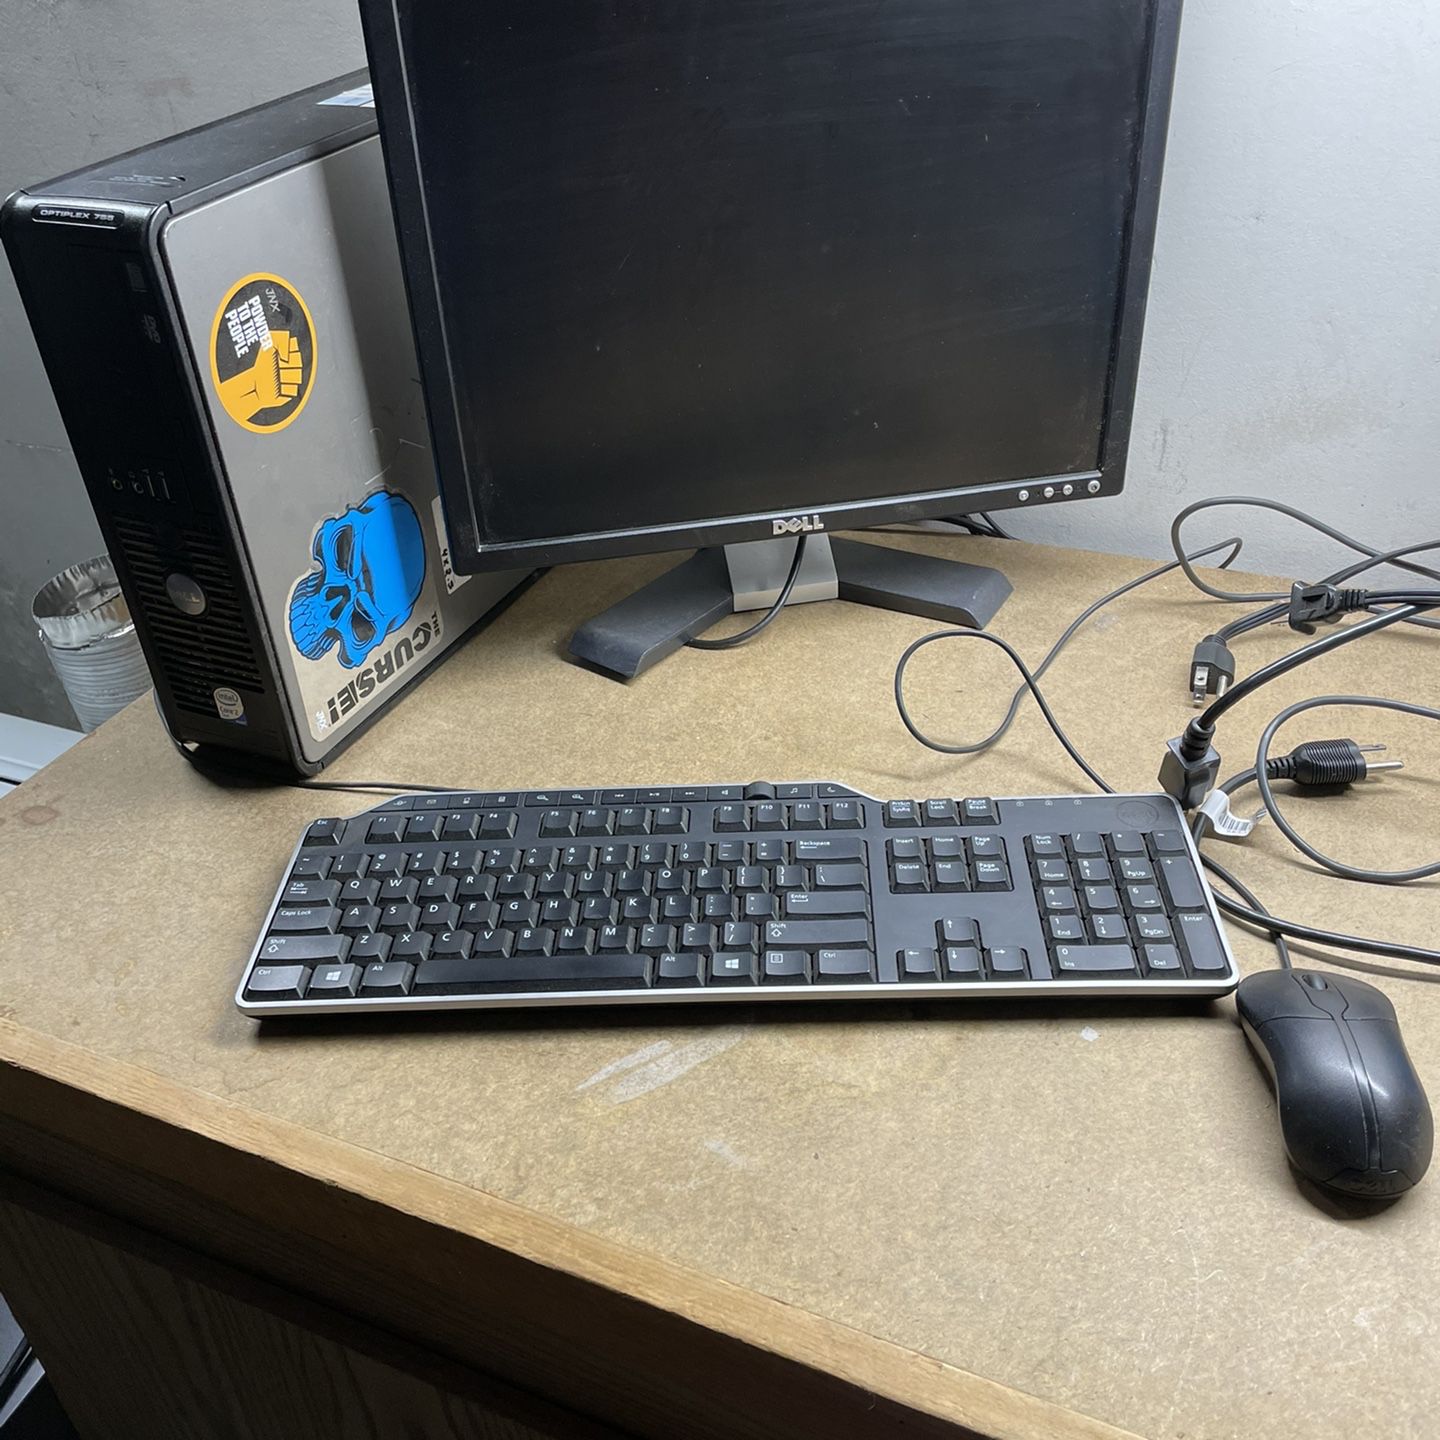 Dell PC Desktop Computer